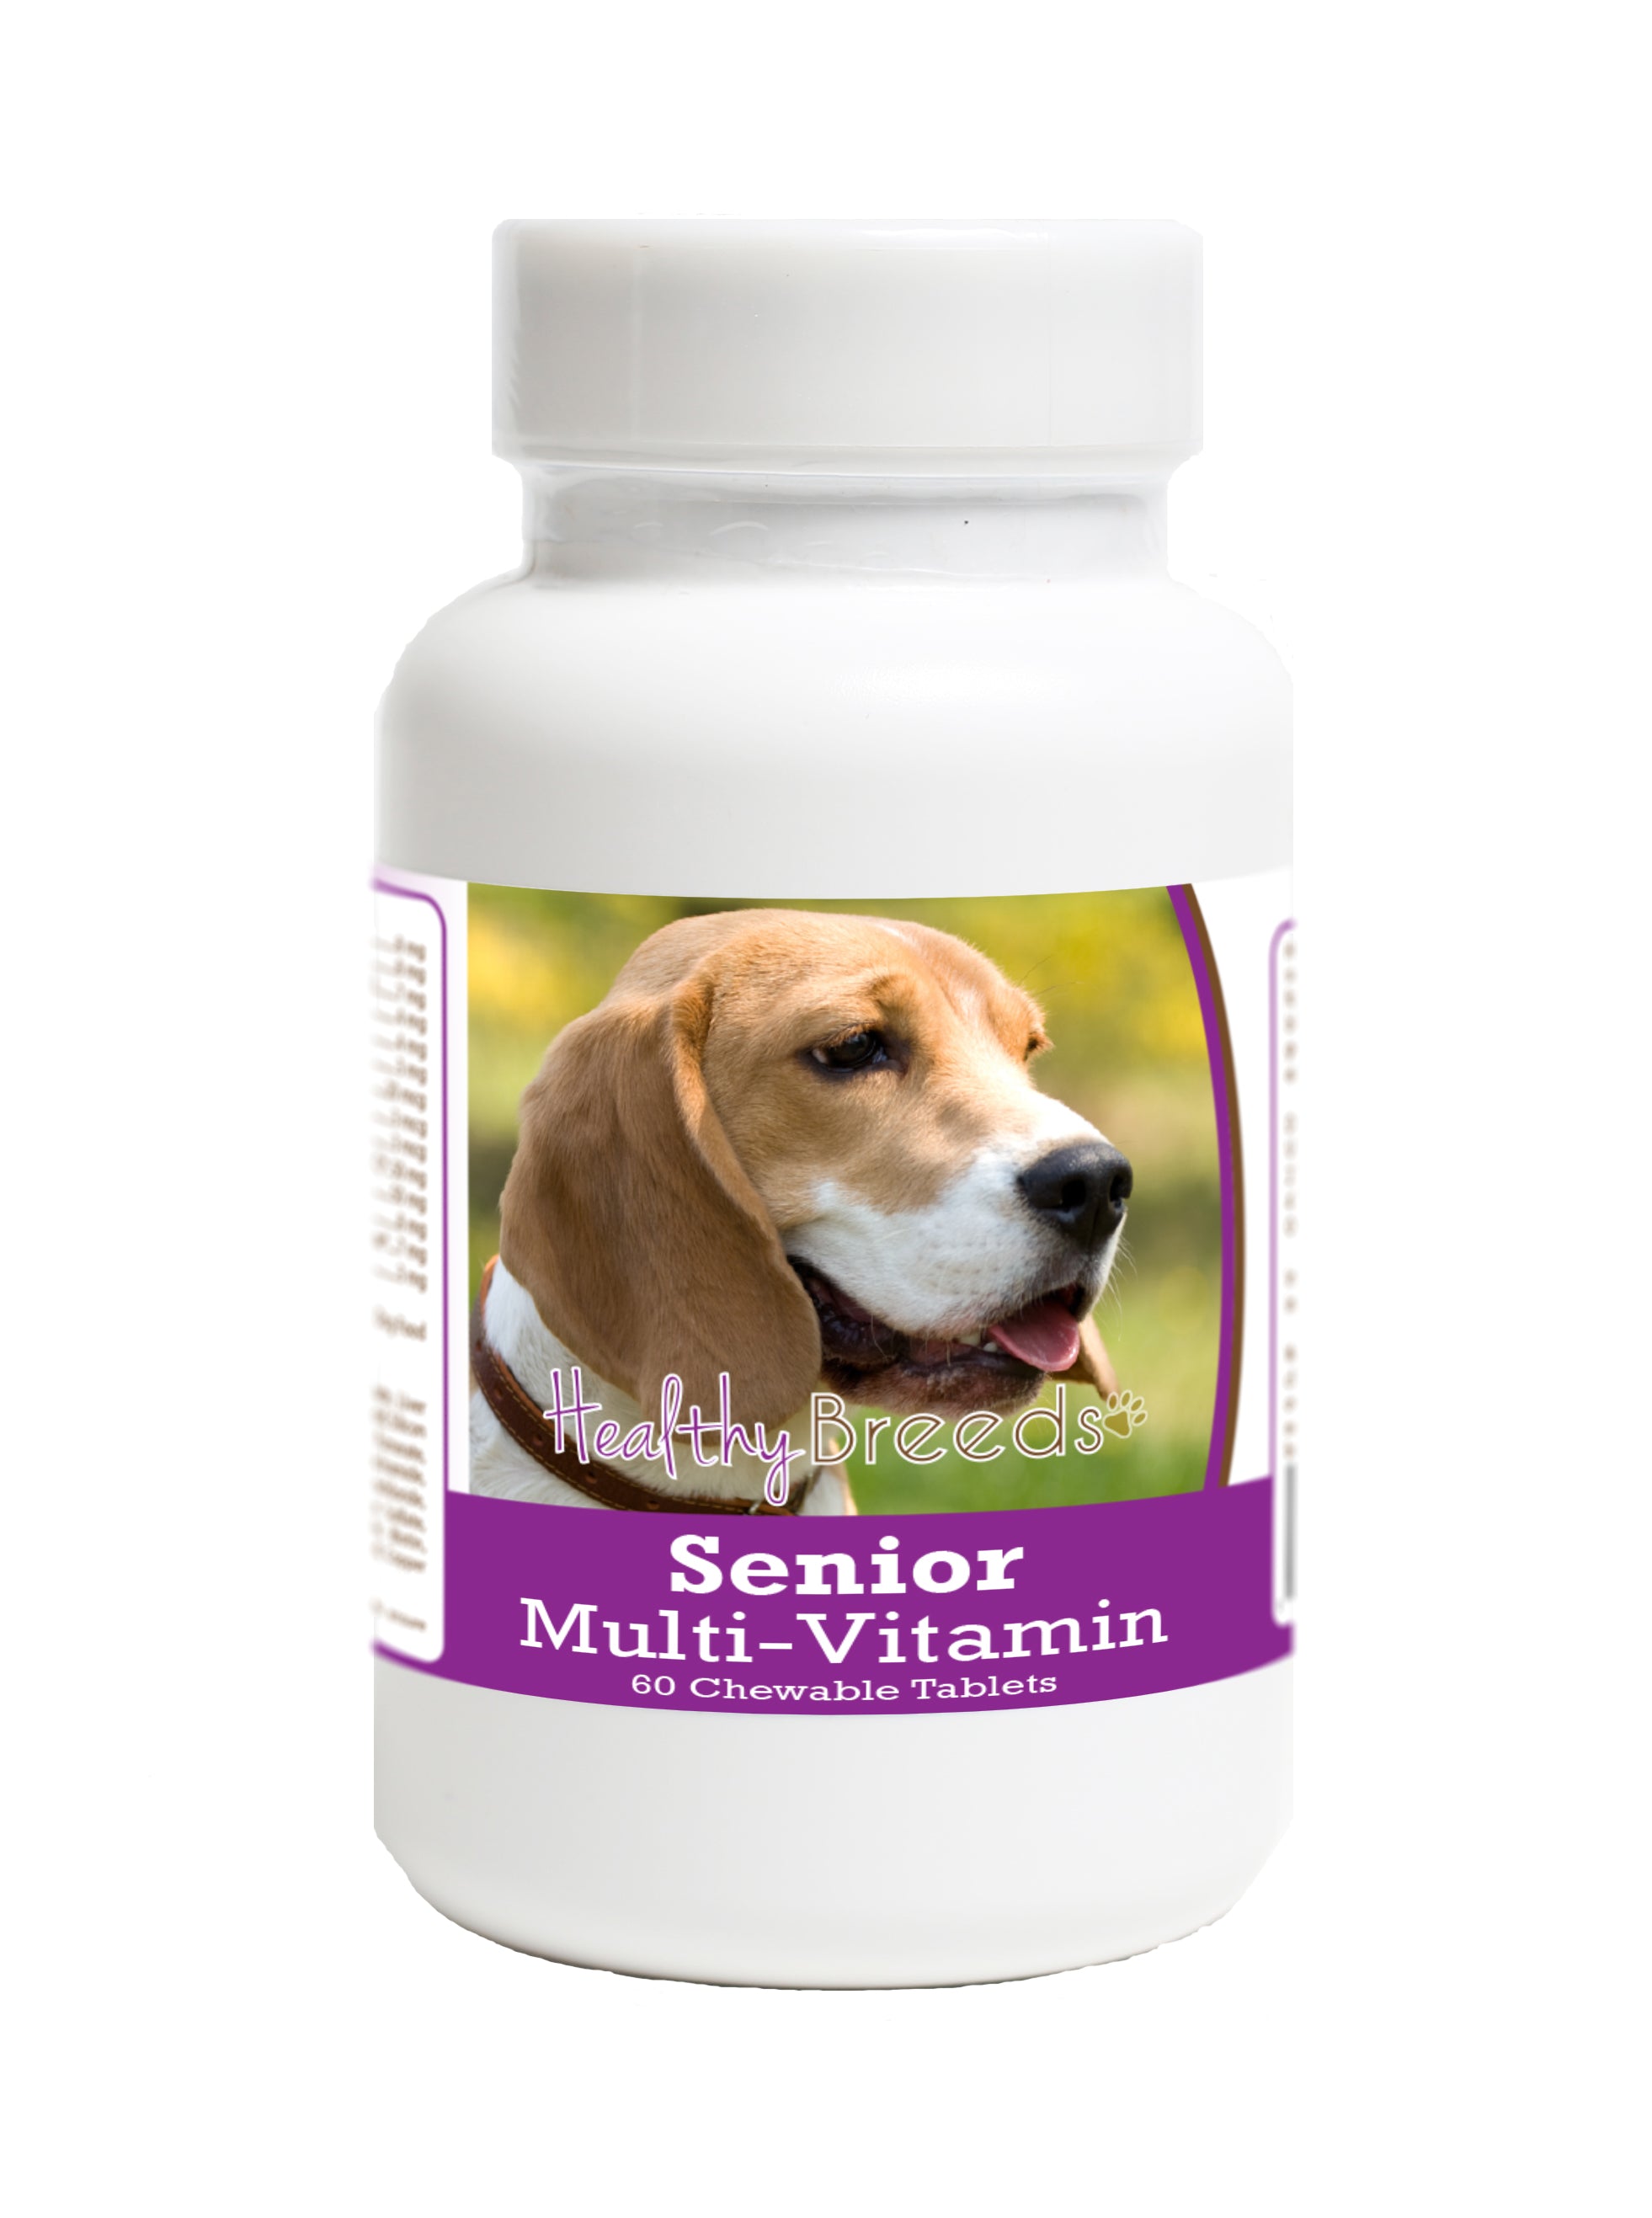 Beagle Senior Dog Multivitamin Tablets 60 Count